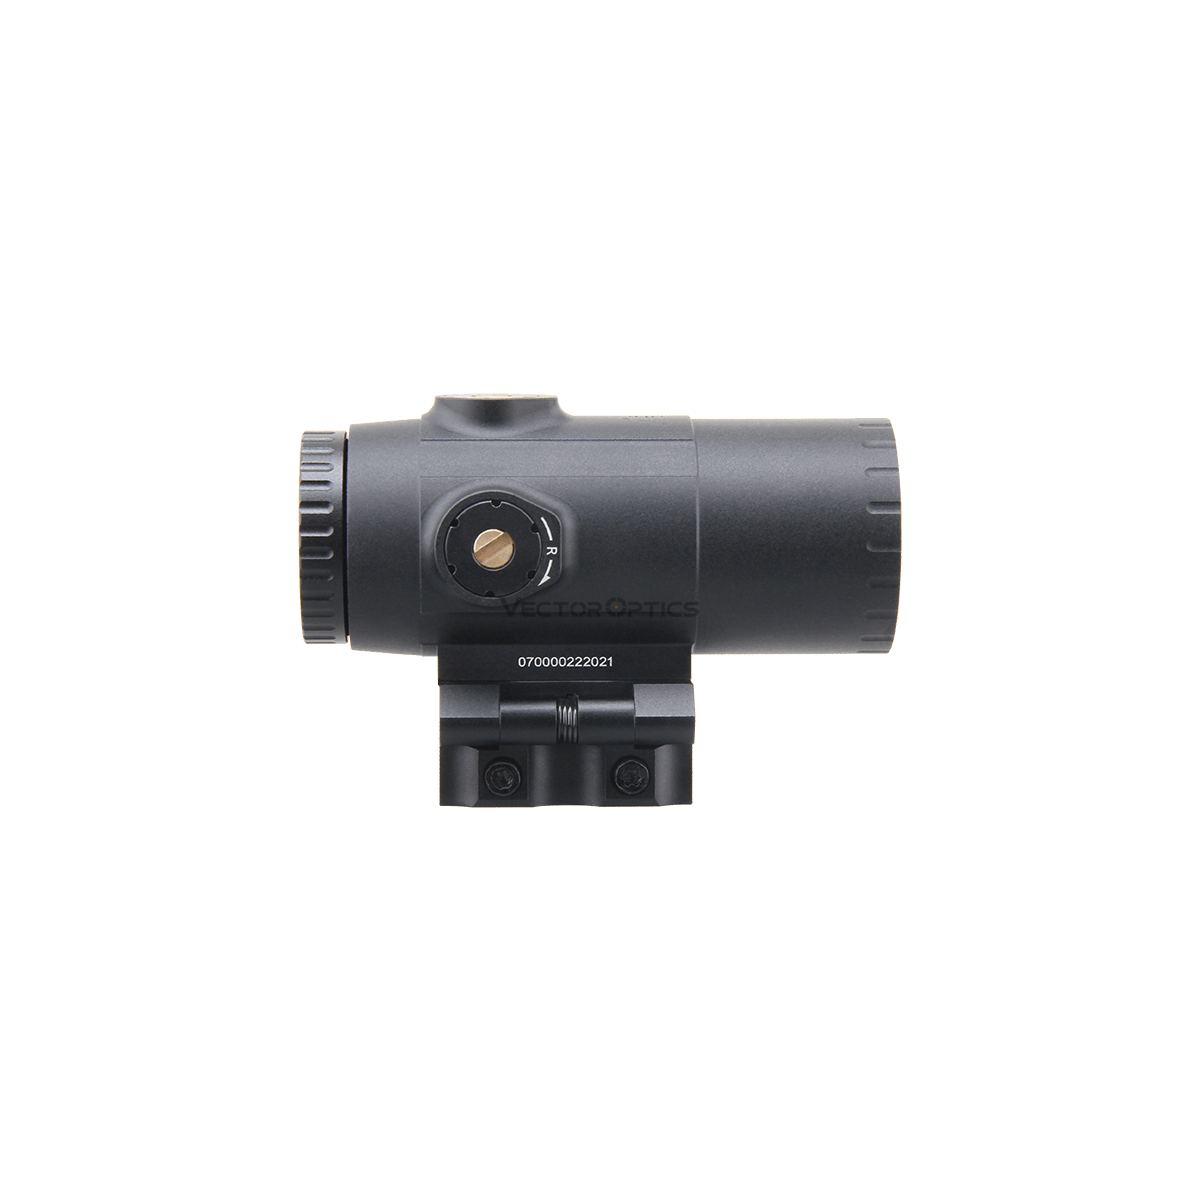 Paragon 5x30 Micro Magnifier